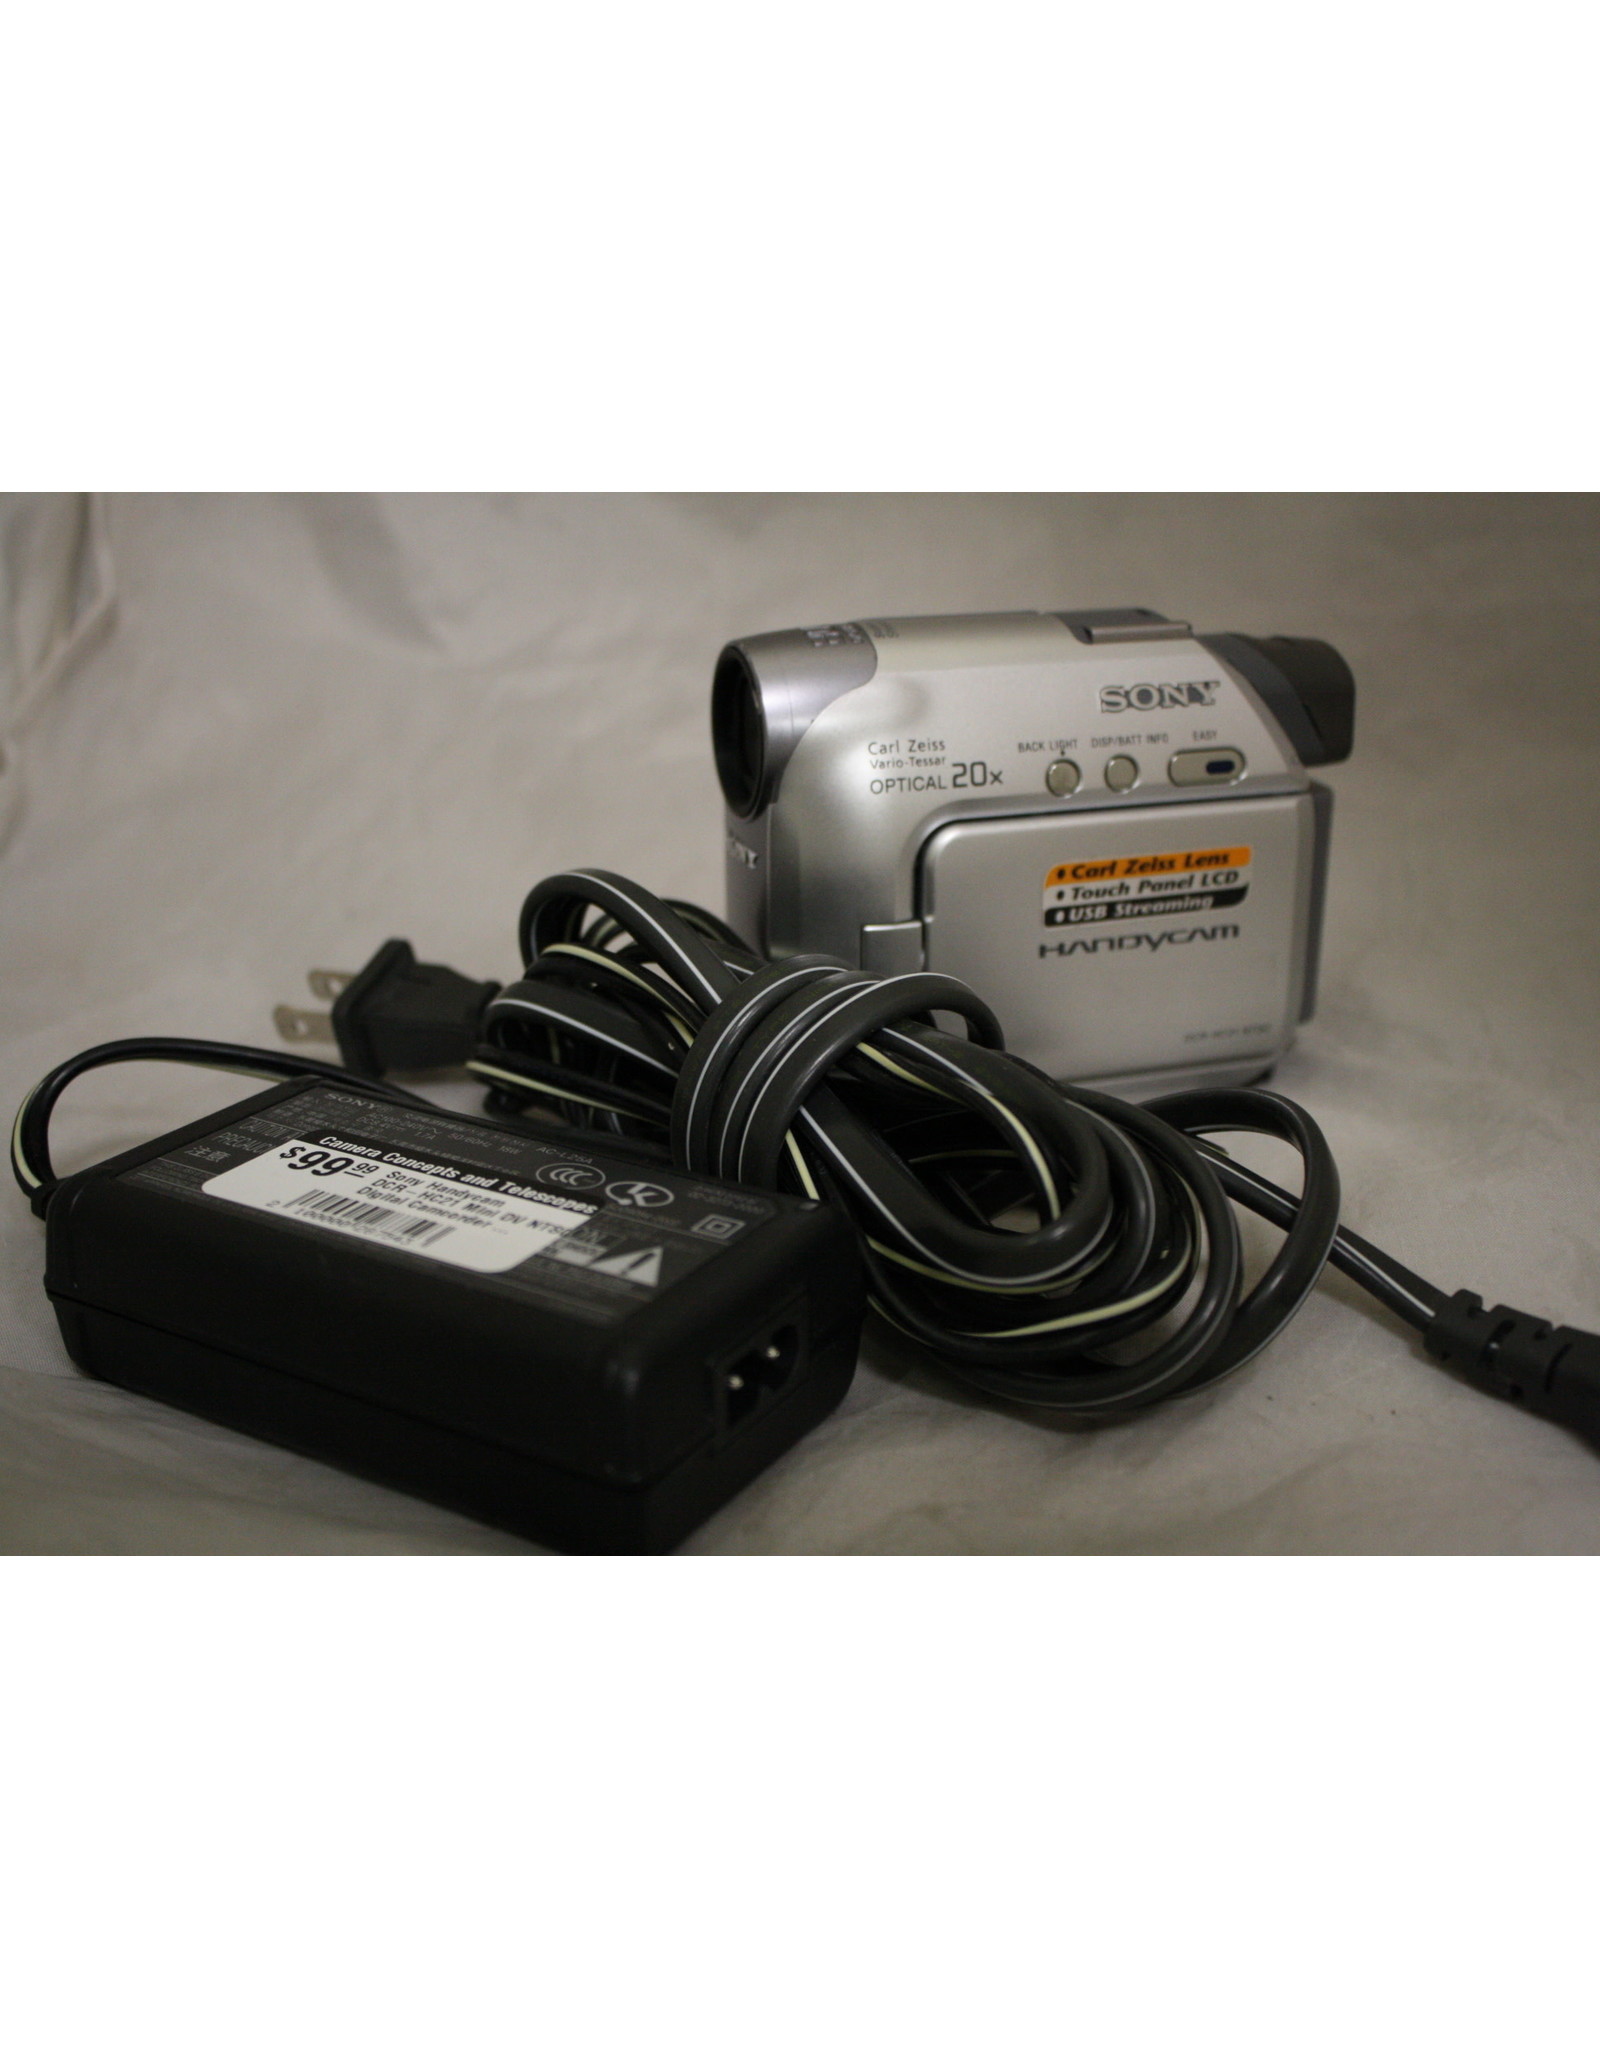 Agfa Sony Handycam DCR-HC21 Mini DV NTSC Digital Camcorder with bag and charger 